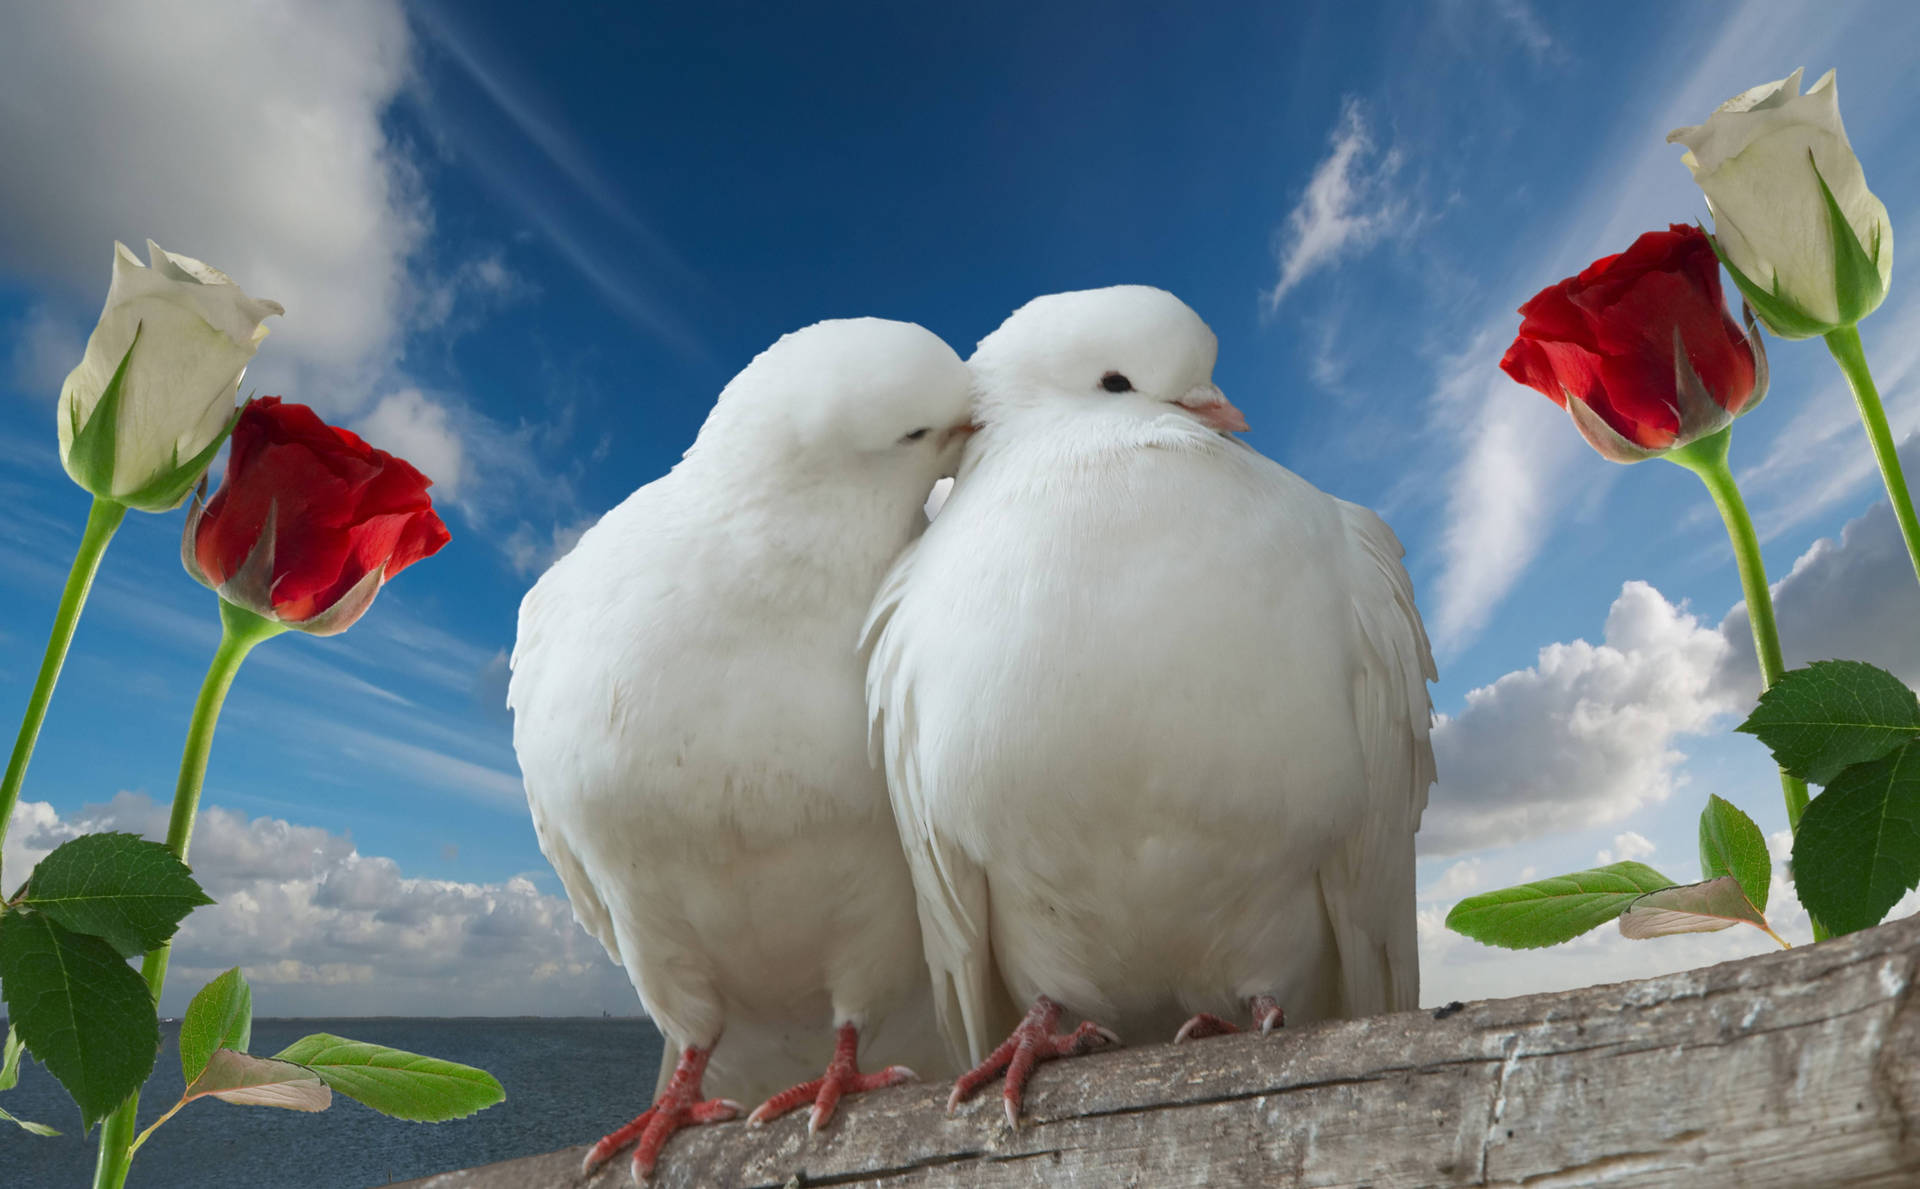 Free Love Birds Wallpaper Downloads, [100+] Love Birds Wallpapers for FREE  